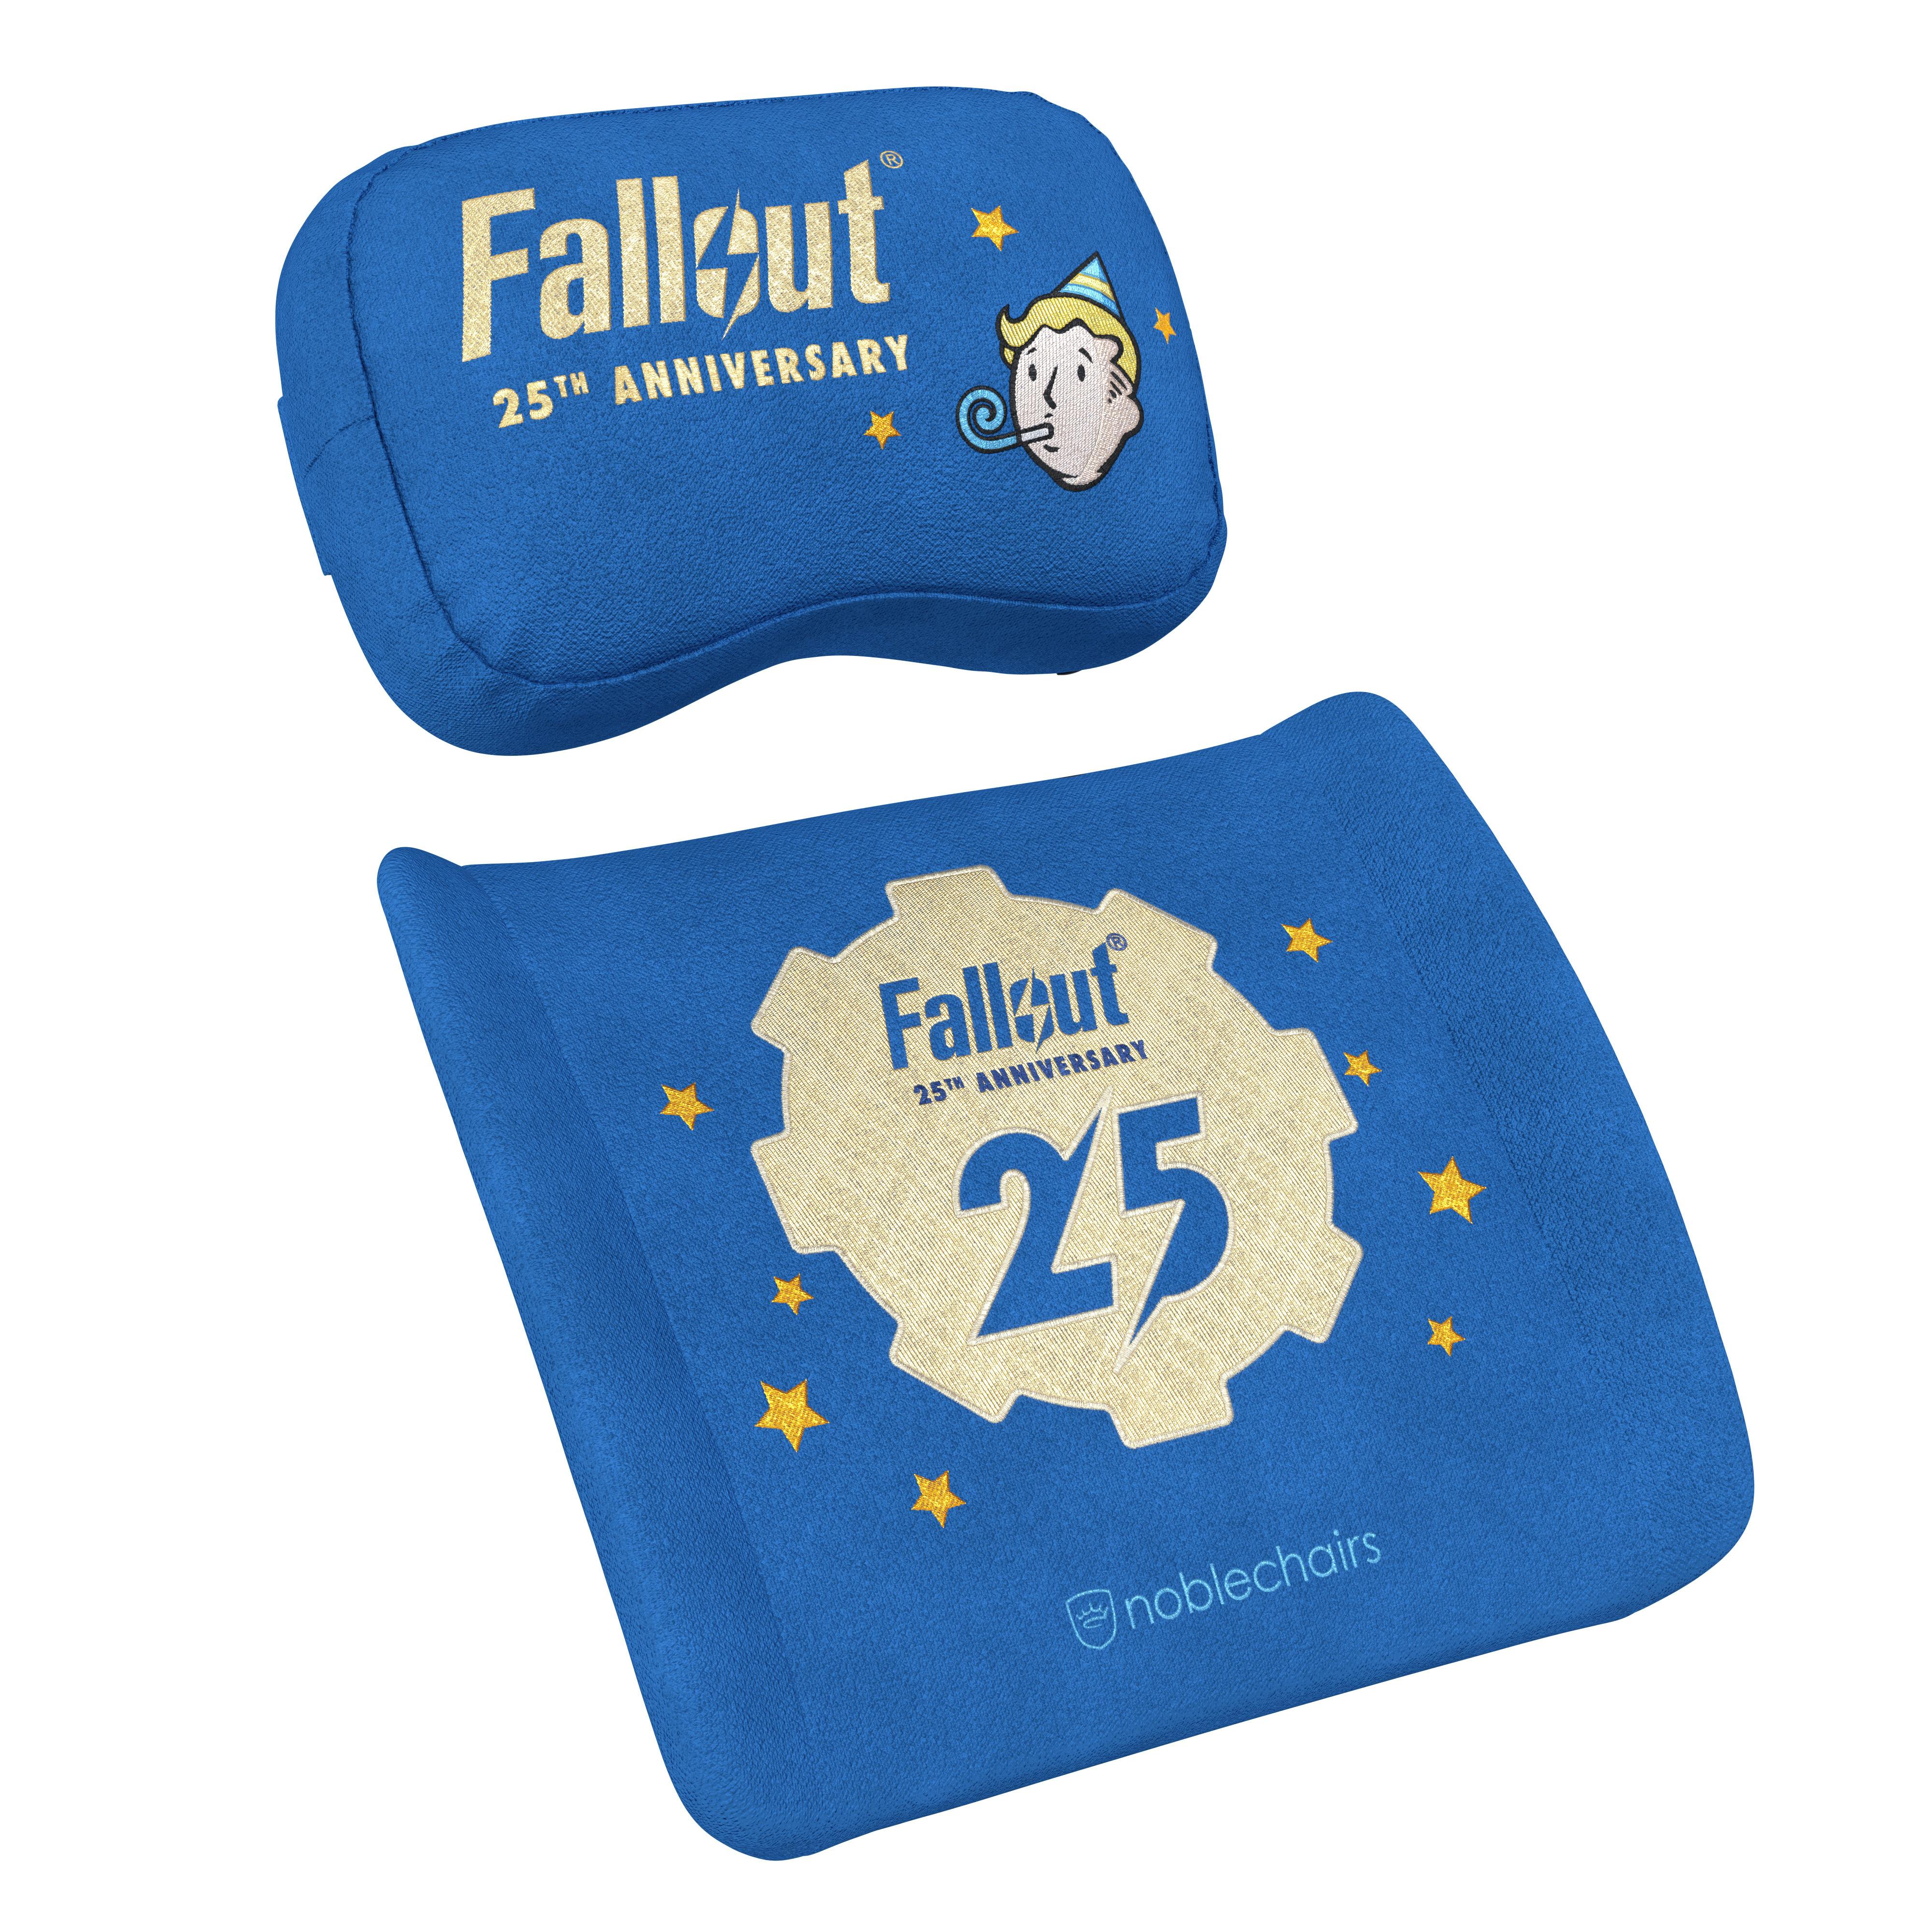  - Memory Foam Fallout 25th Anniversary Edition kussenset